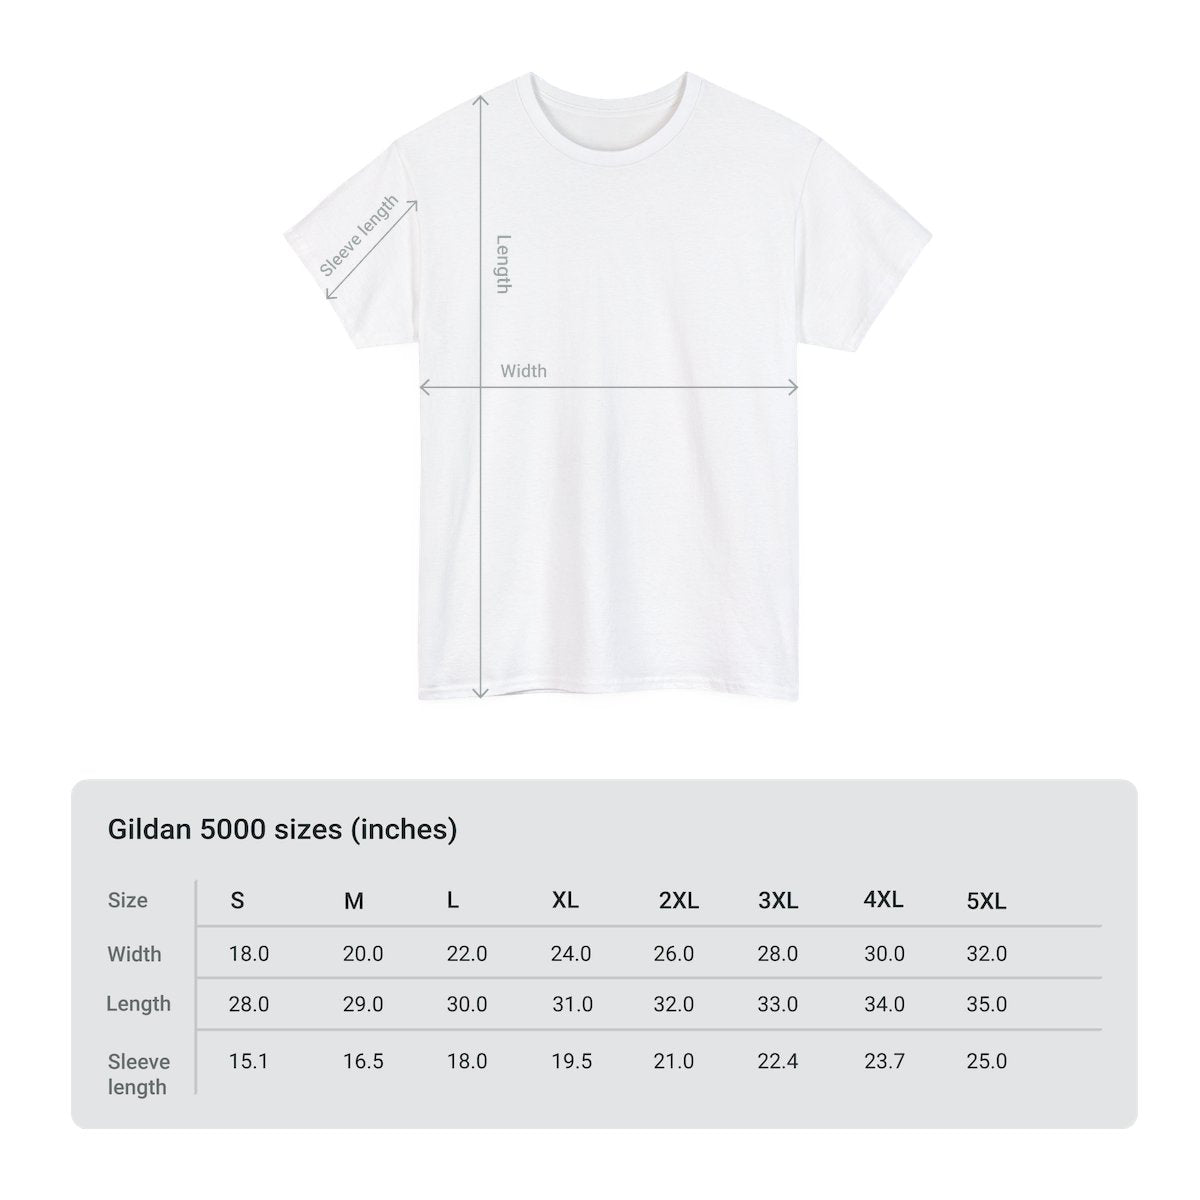 Jayson Tatum Boston Celtics High Quality Printed Unisex Heavy Cotton T-shirt